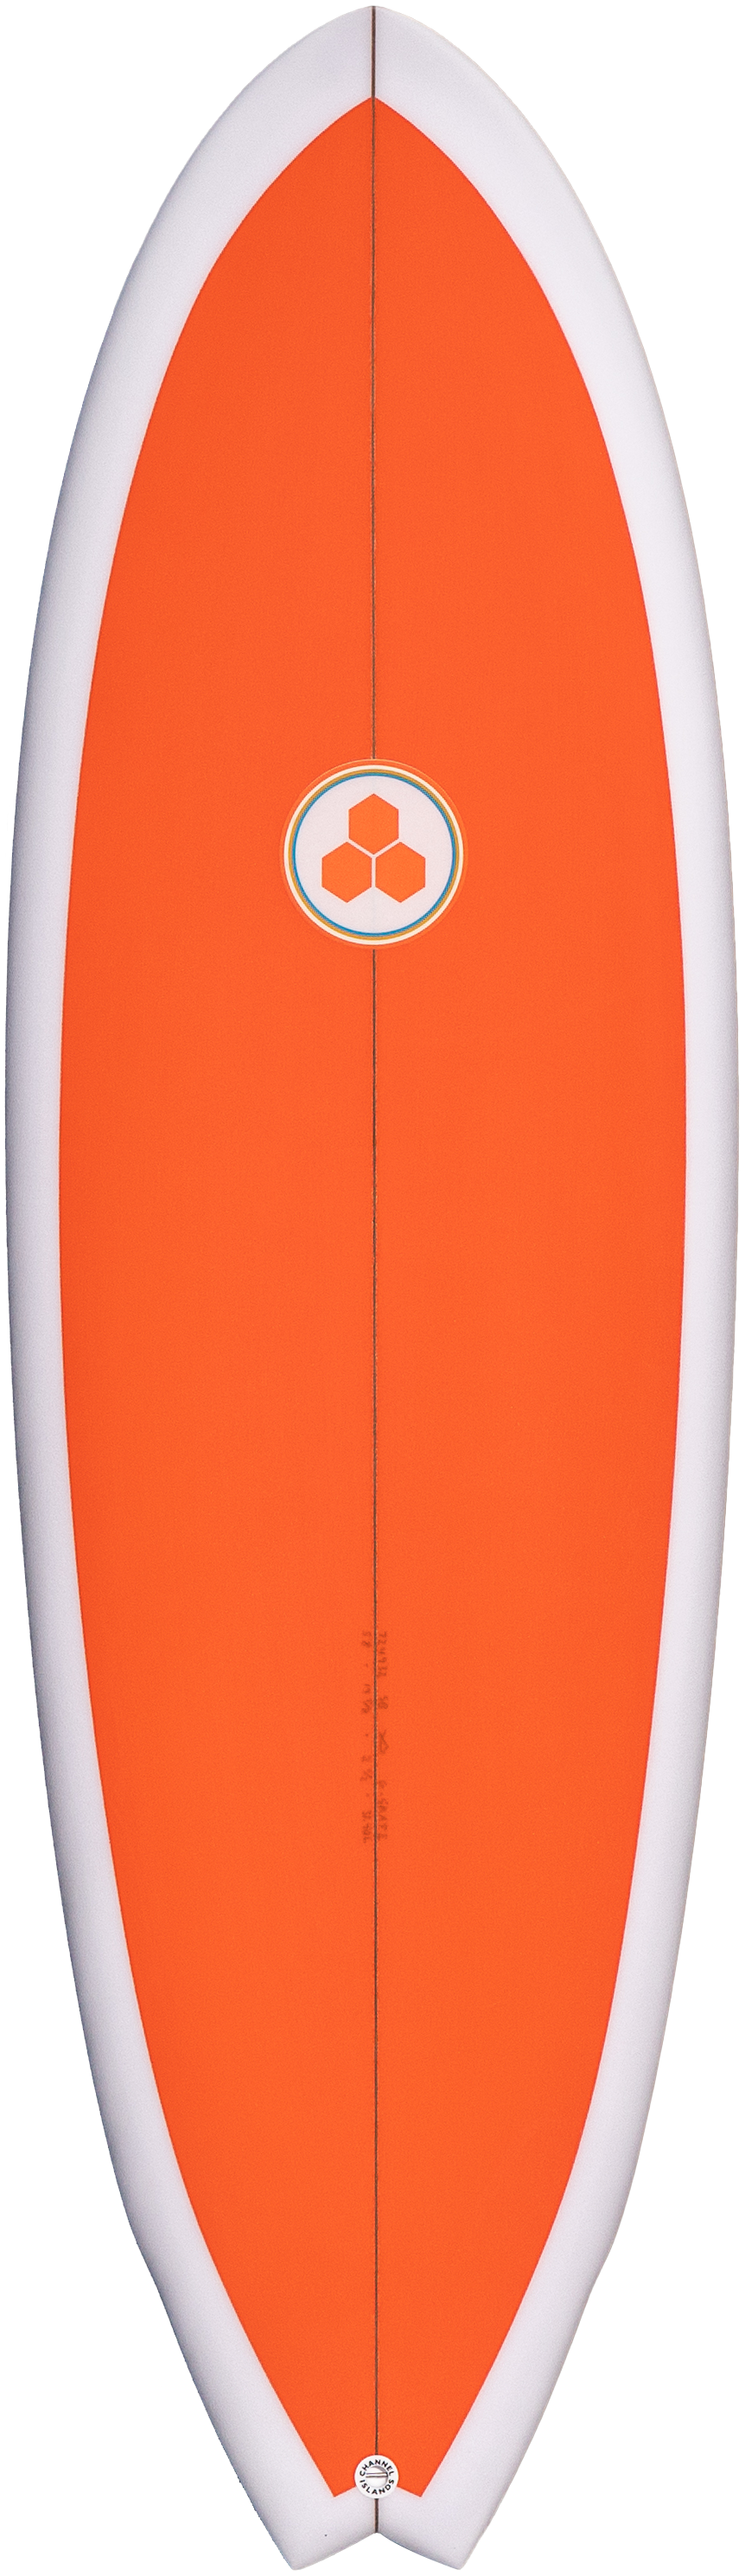 G Skate – Channel Islands Surfboards